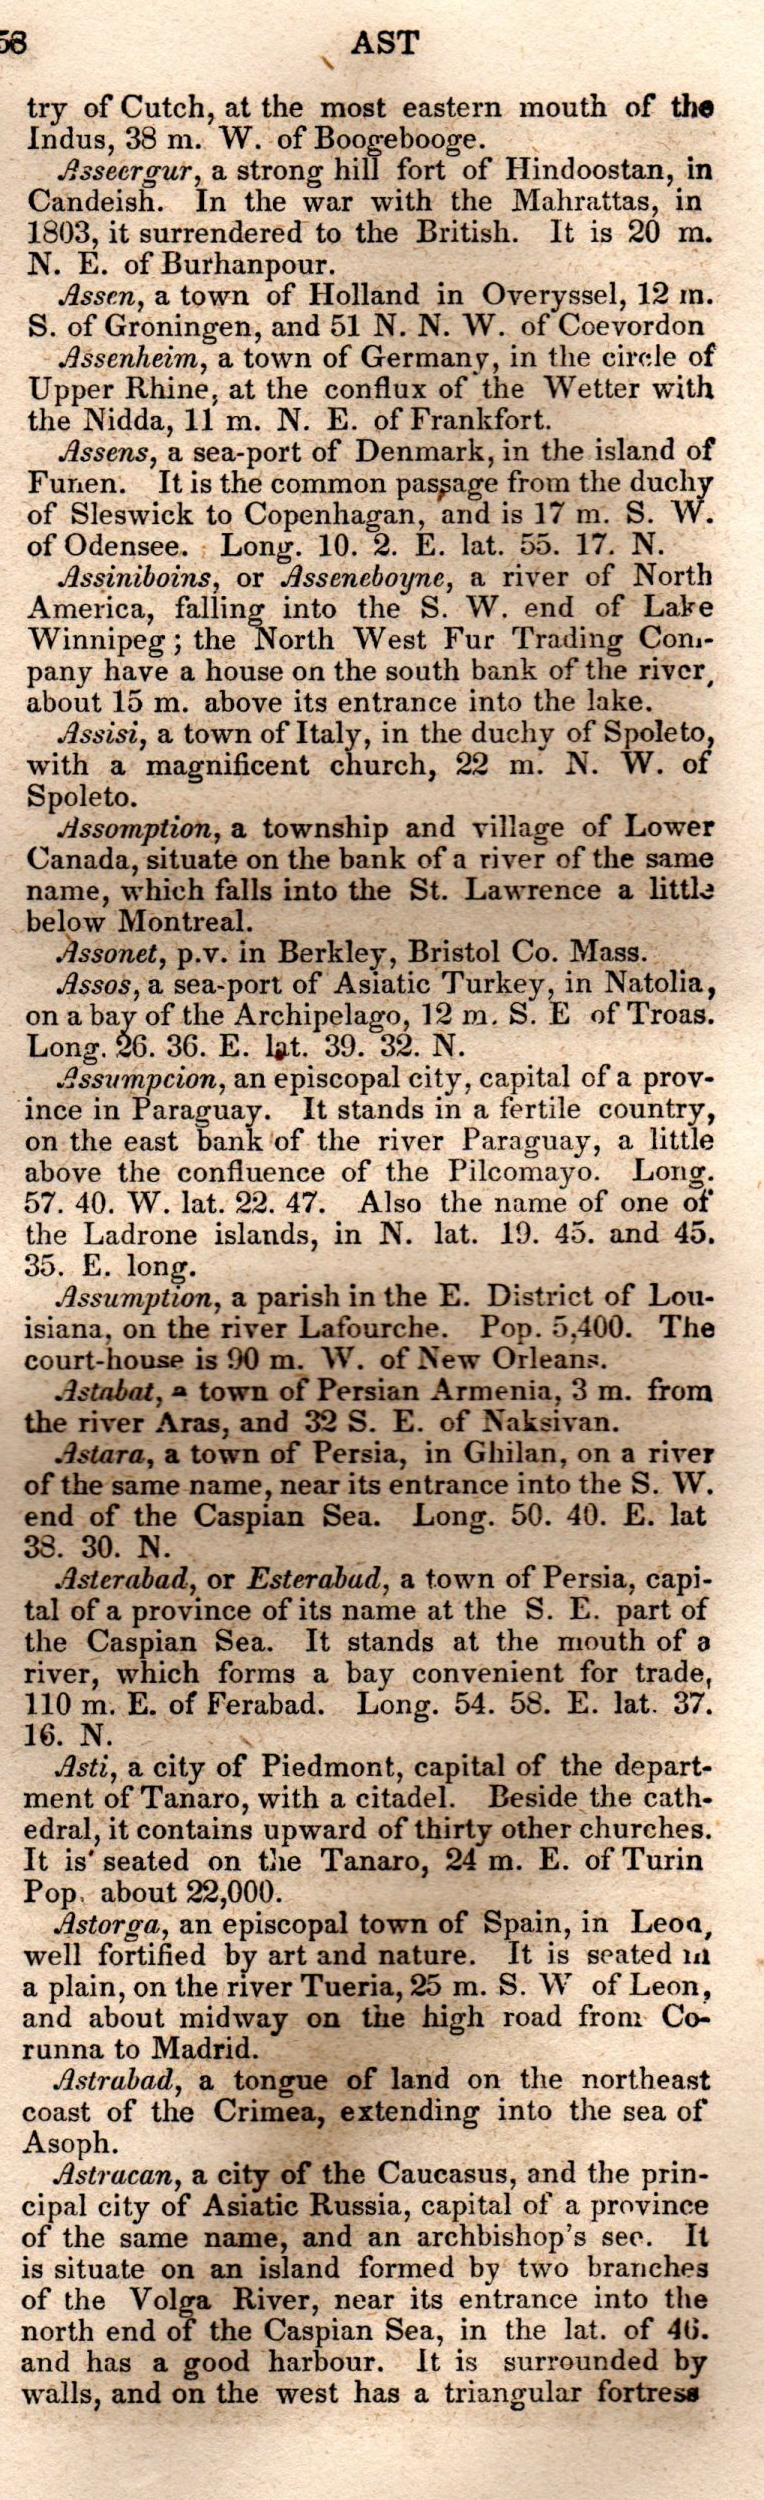 Brookes’ Universal Gazetteer (1850), Page 58 Right Column